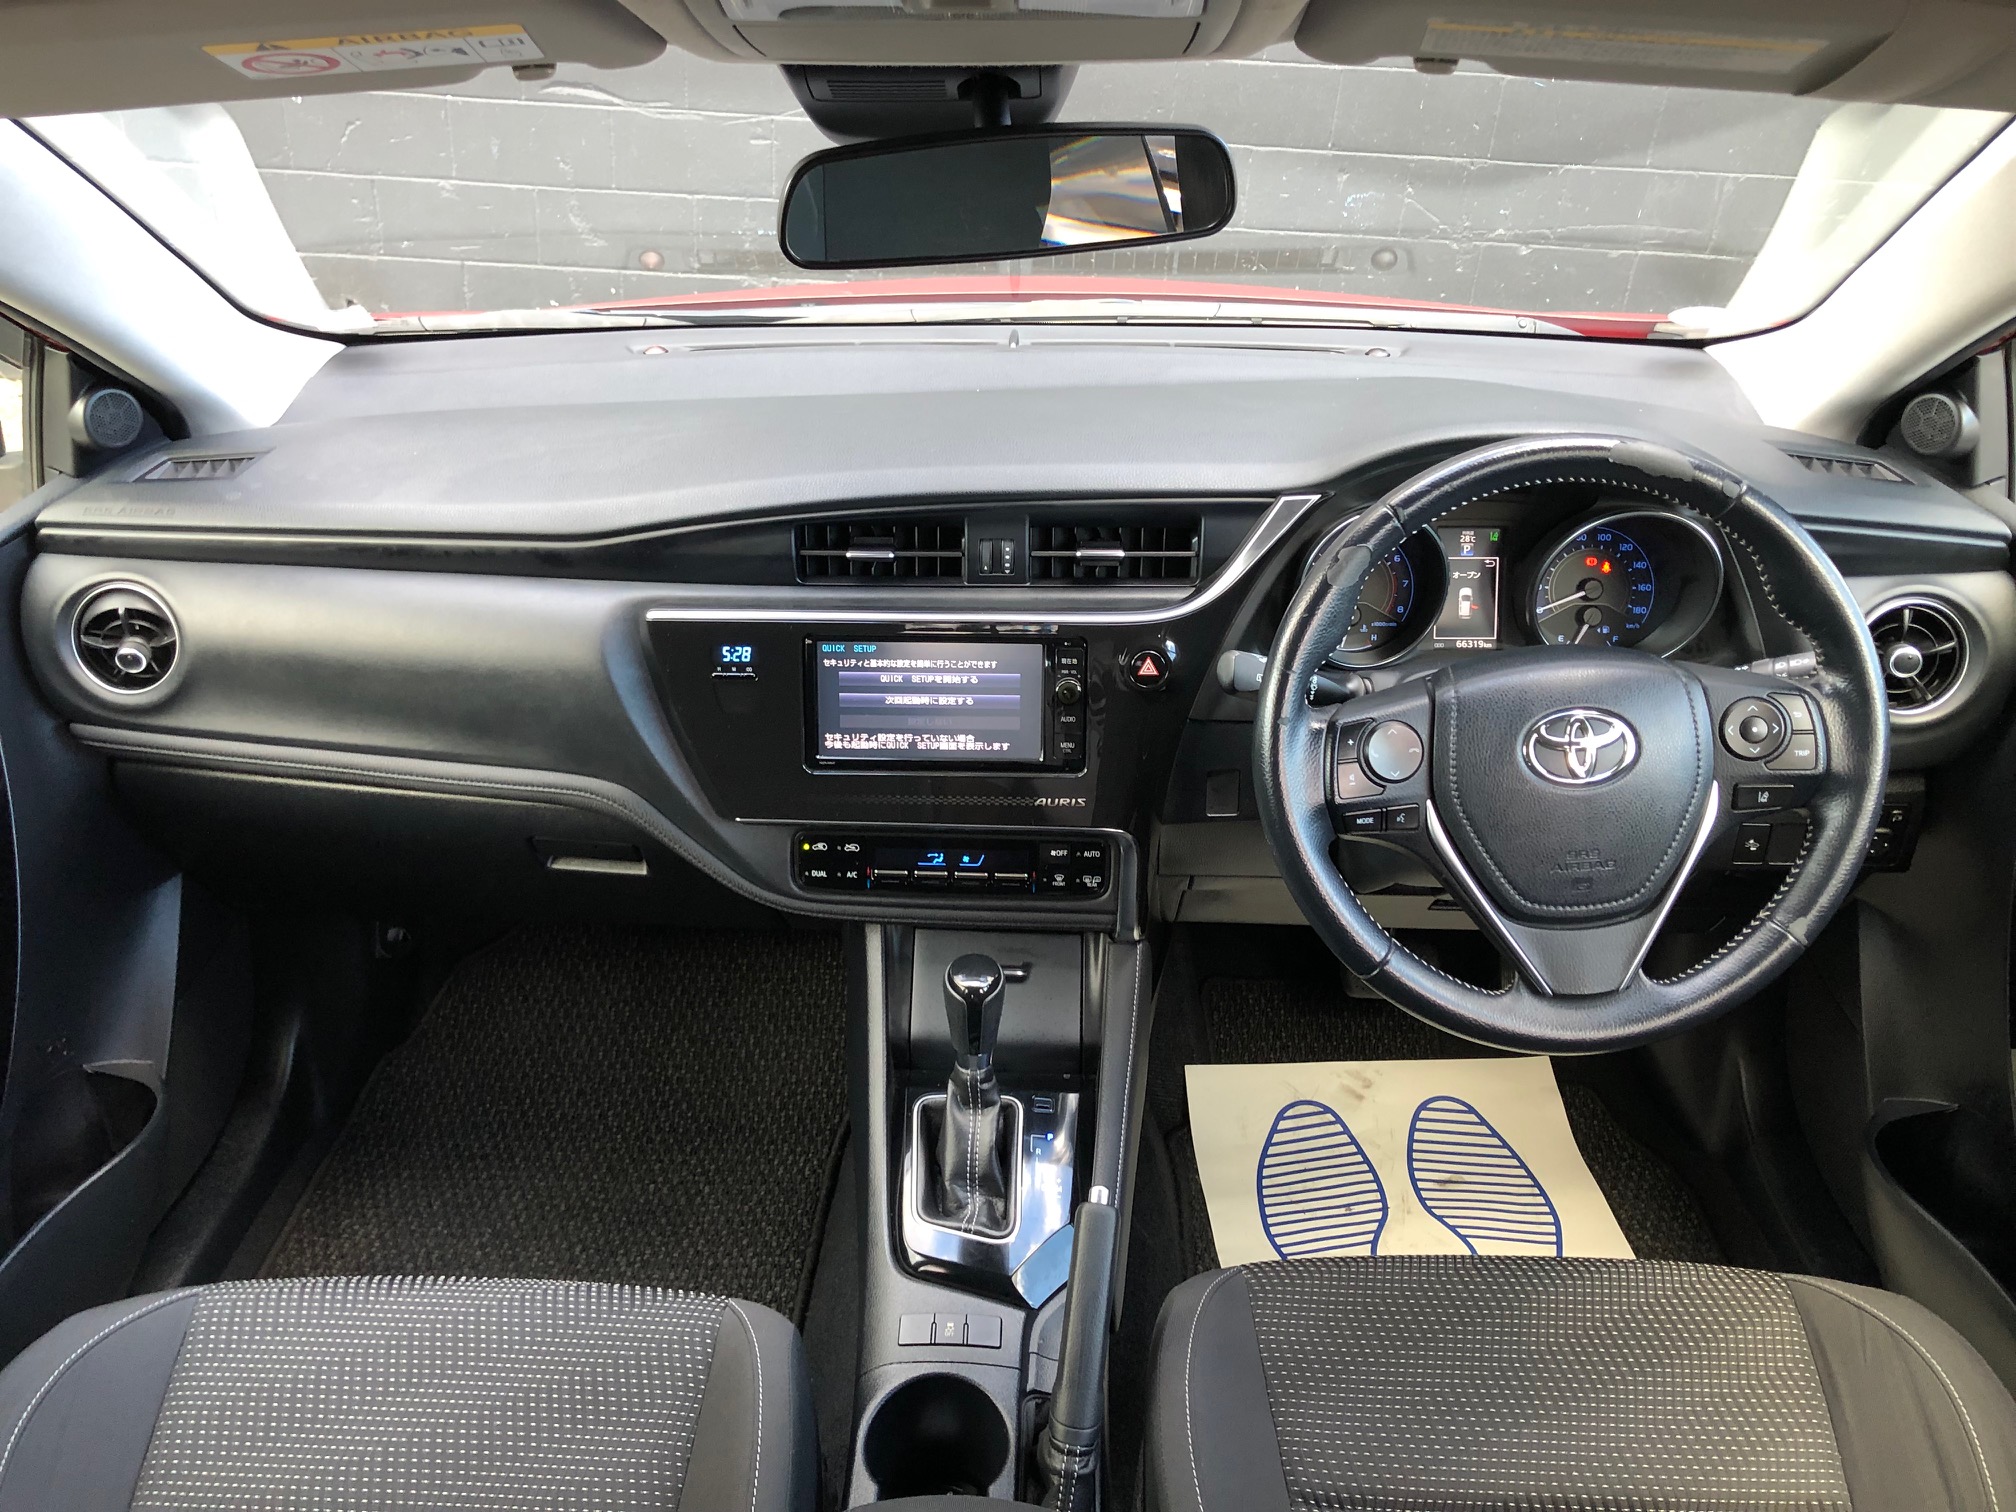 Toyota Auris 2016 Image 13